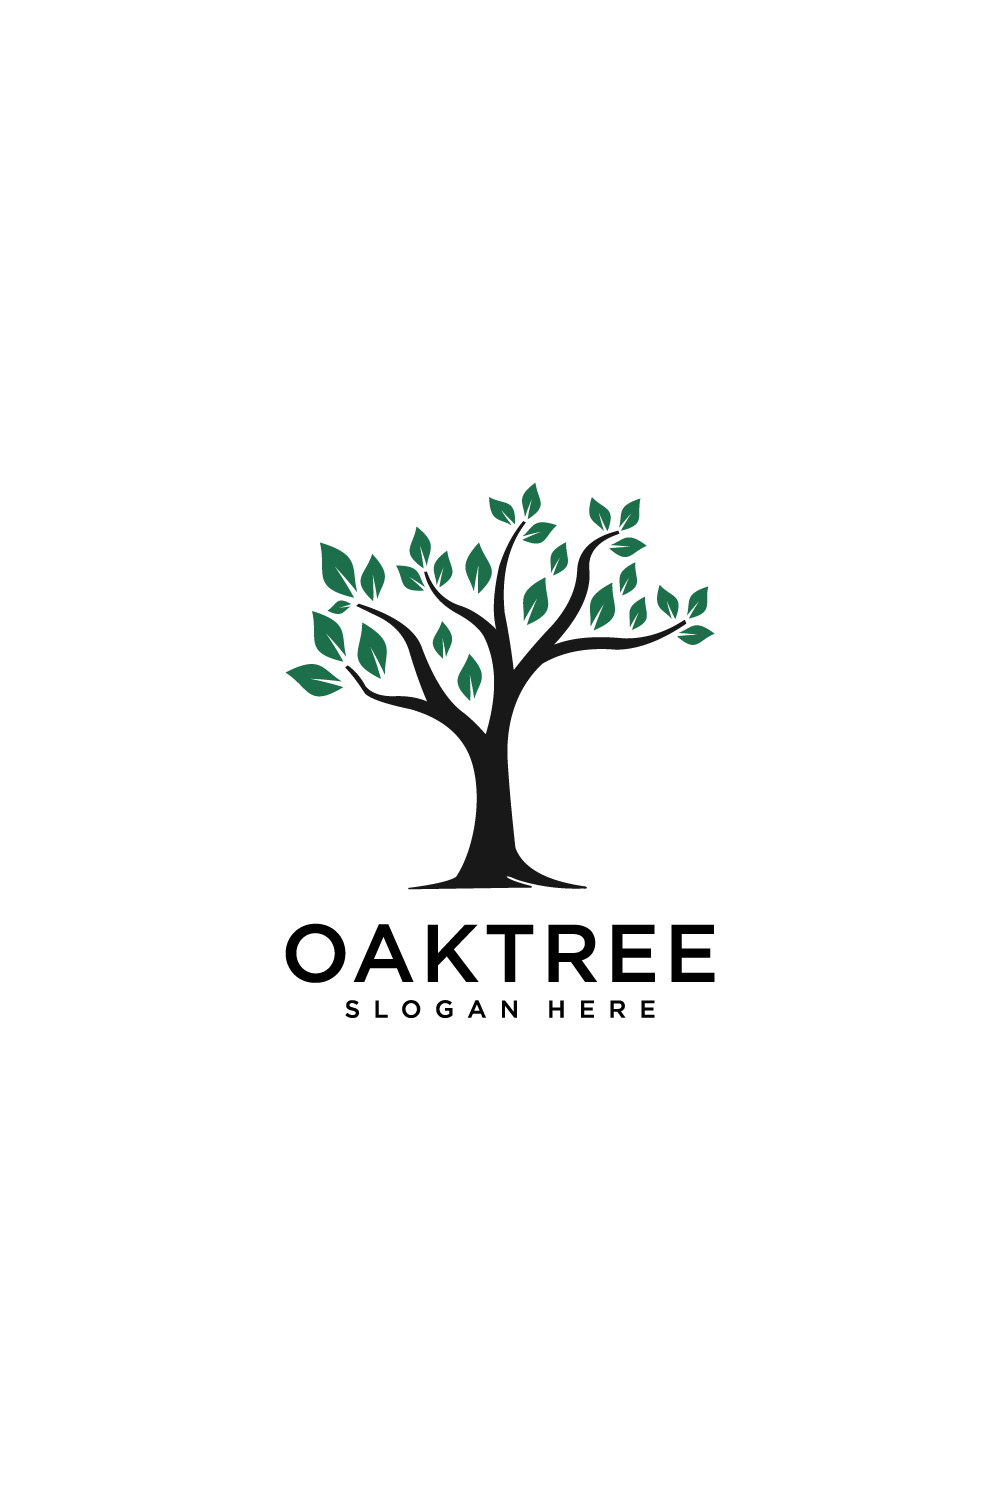 oak tree logo vector pinterest preview image.